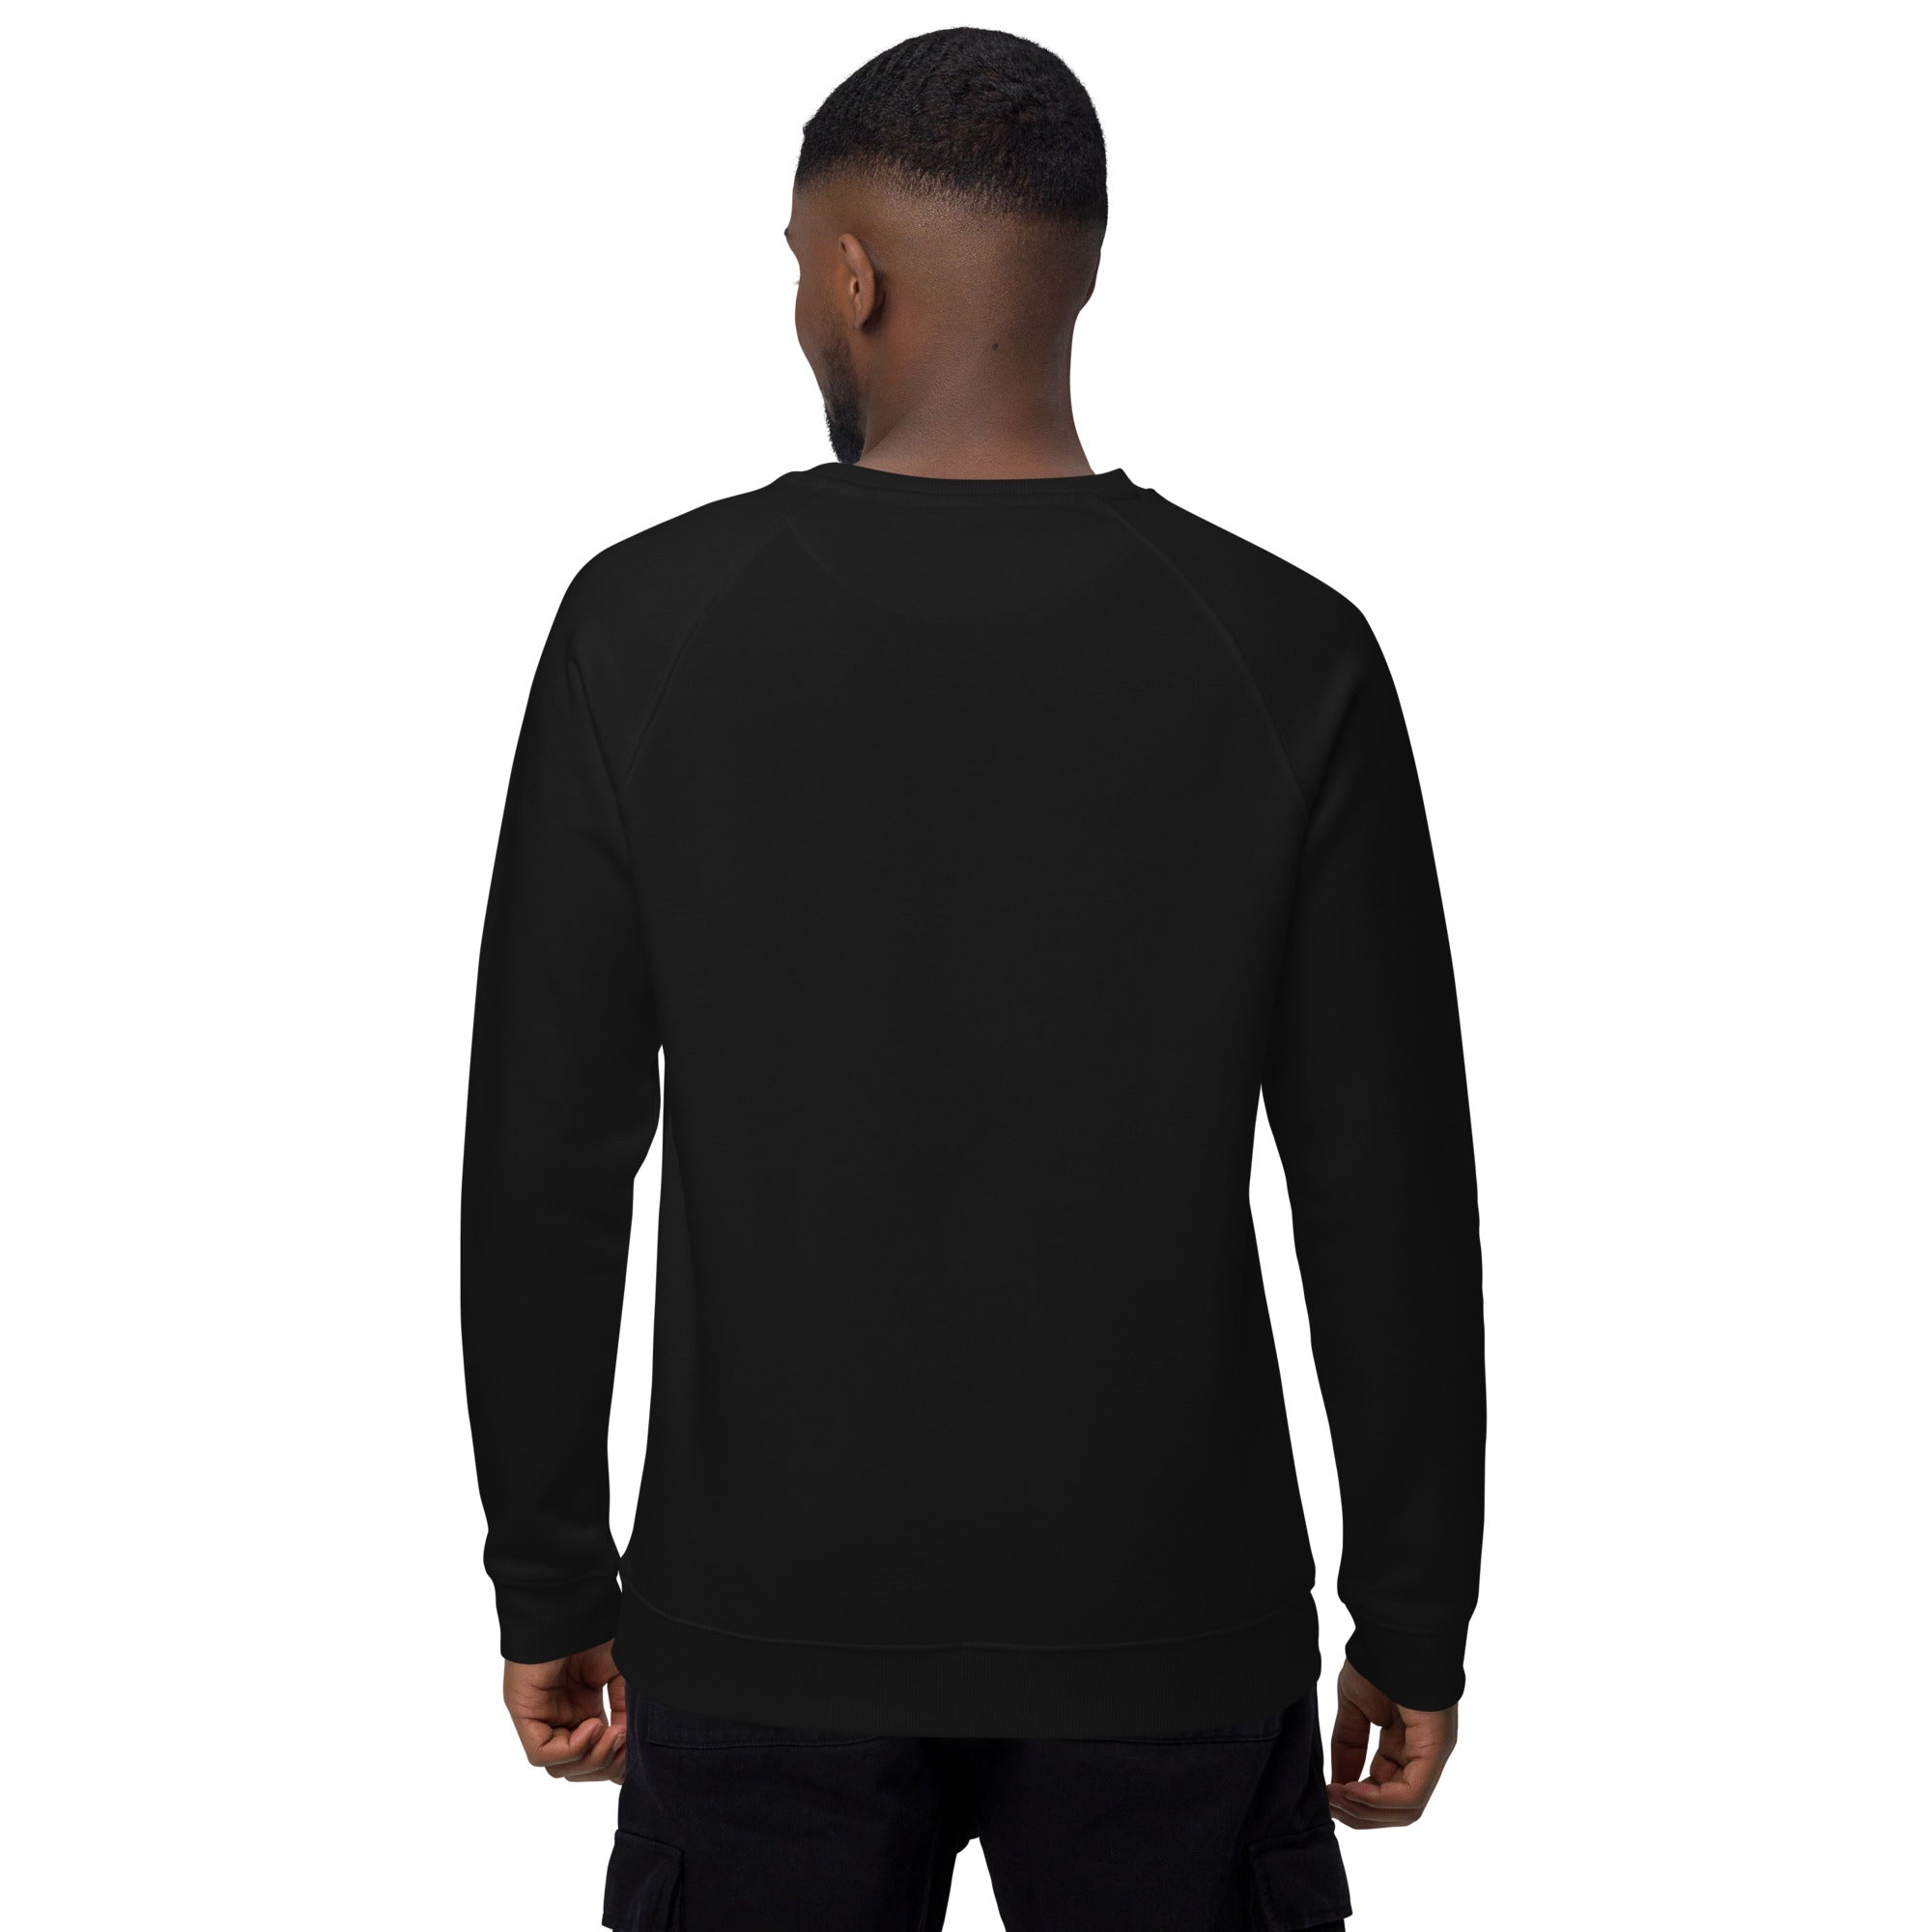 Idlewild Logo White - Black Unisex organic raglan sweatshirt